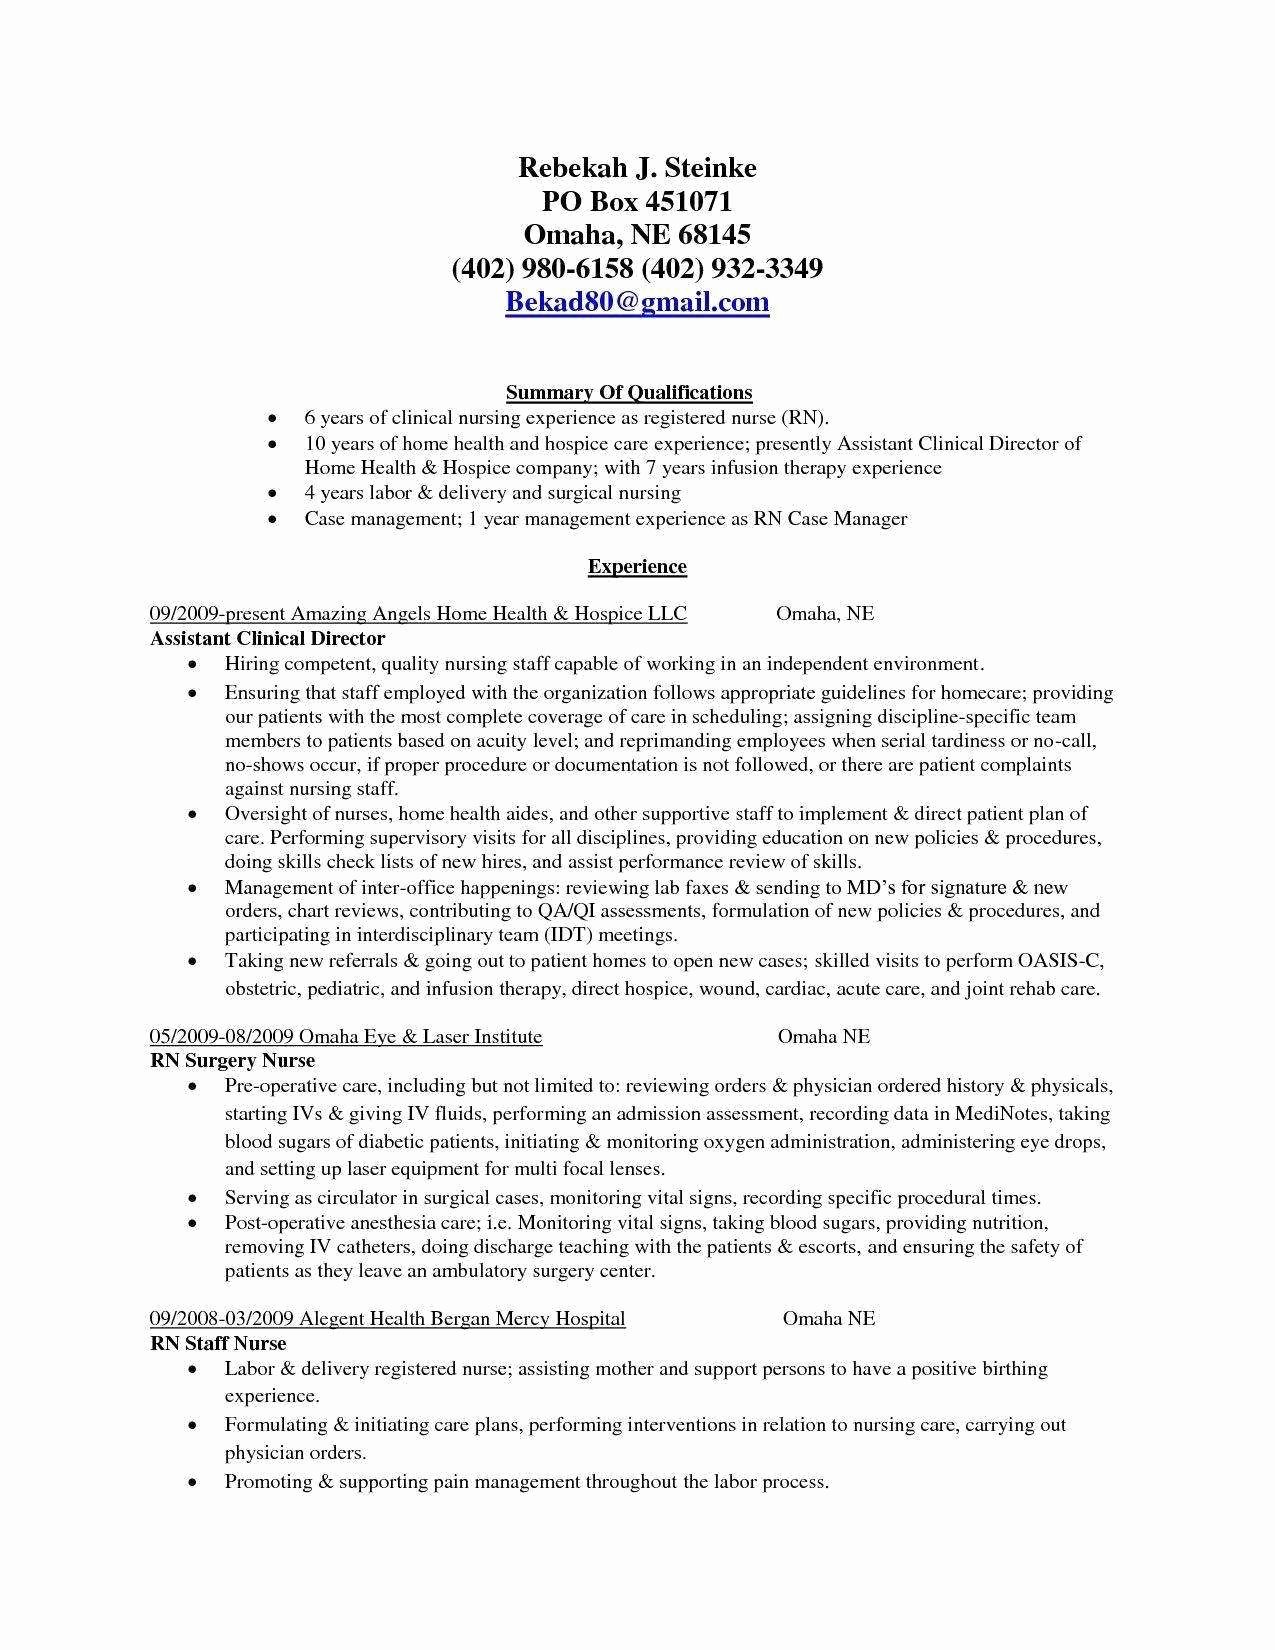 Certified Nursing assistant Job Description Nursing Home